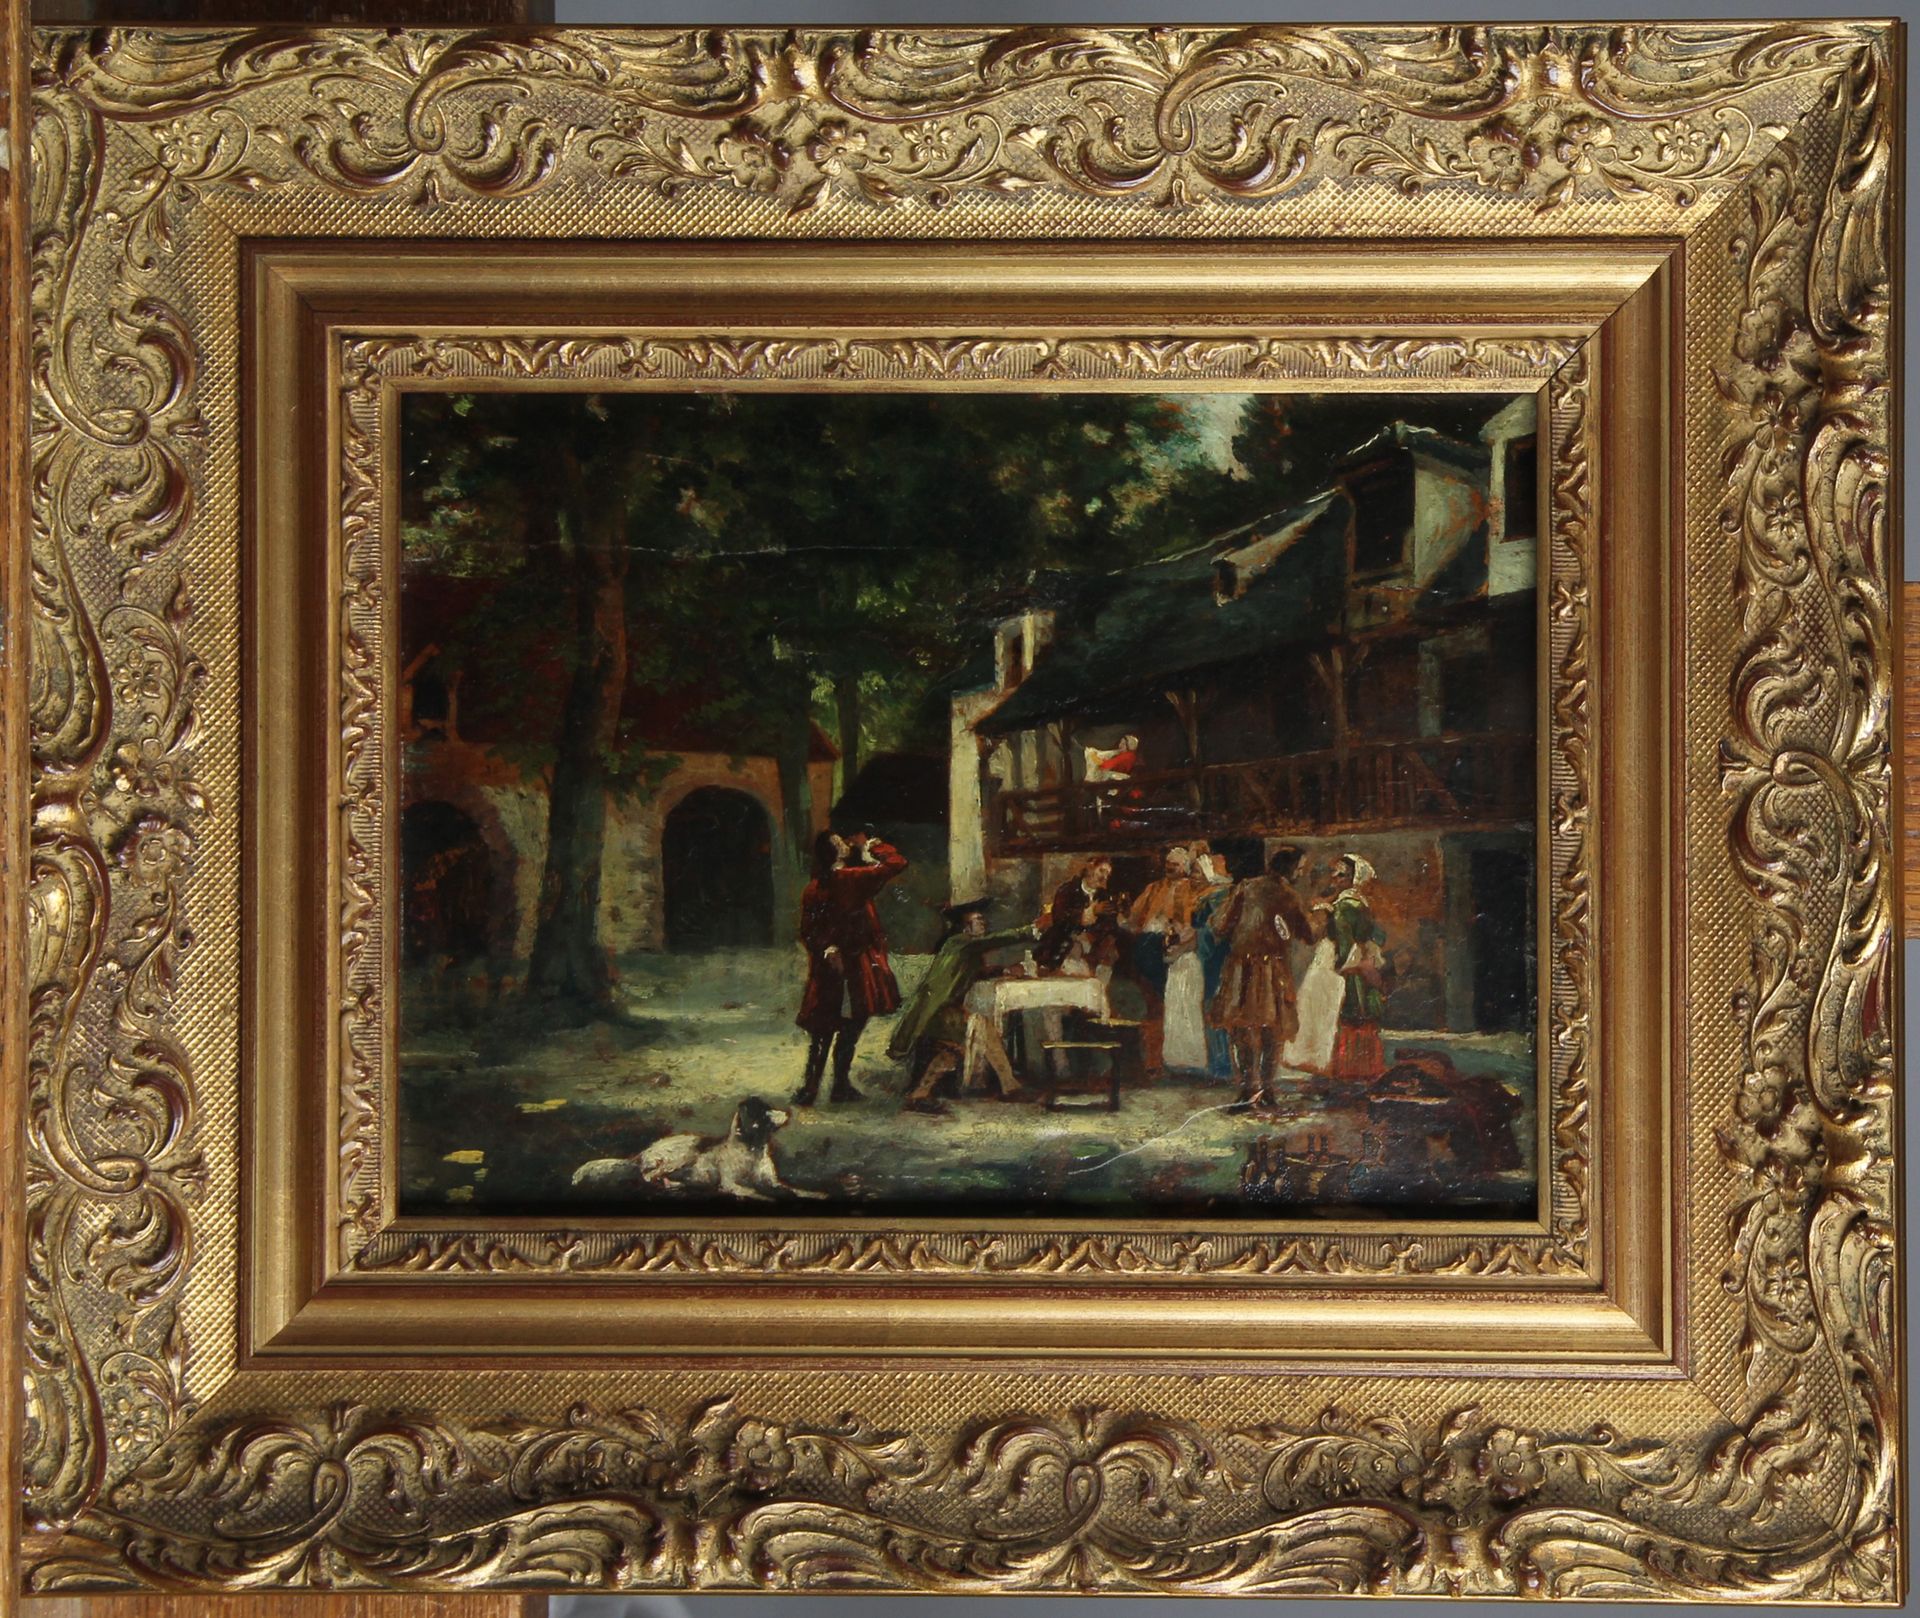 Null 19th CENTURY COPYRIGHT

"Farmyard 

Oil on panel

Size : 19 x 26 cm